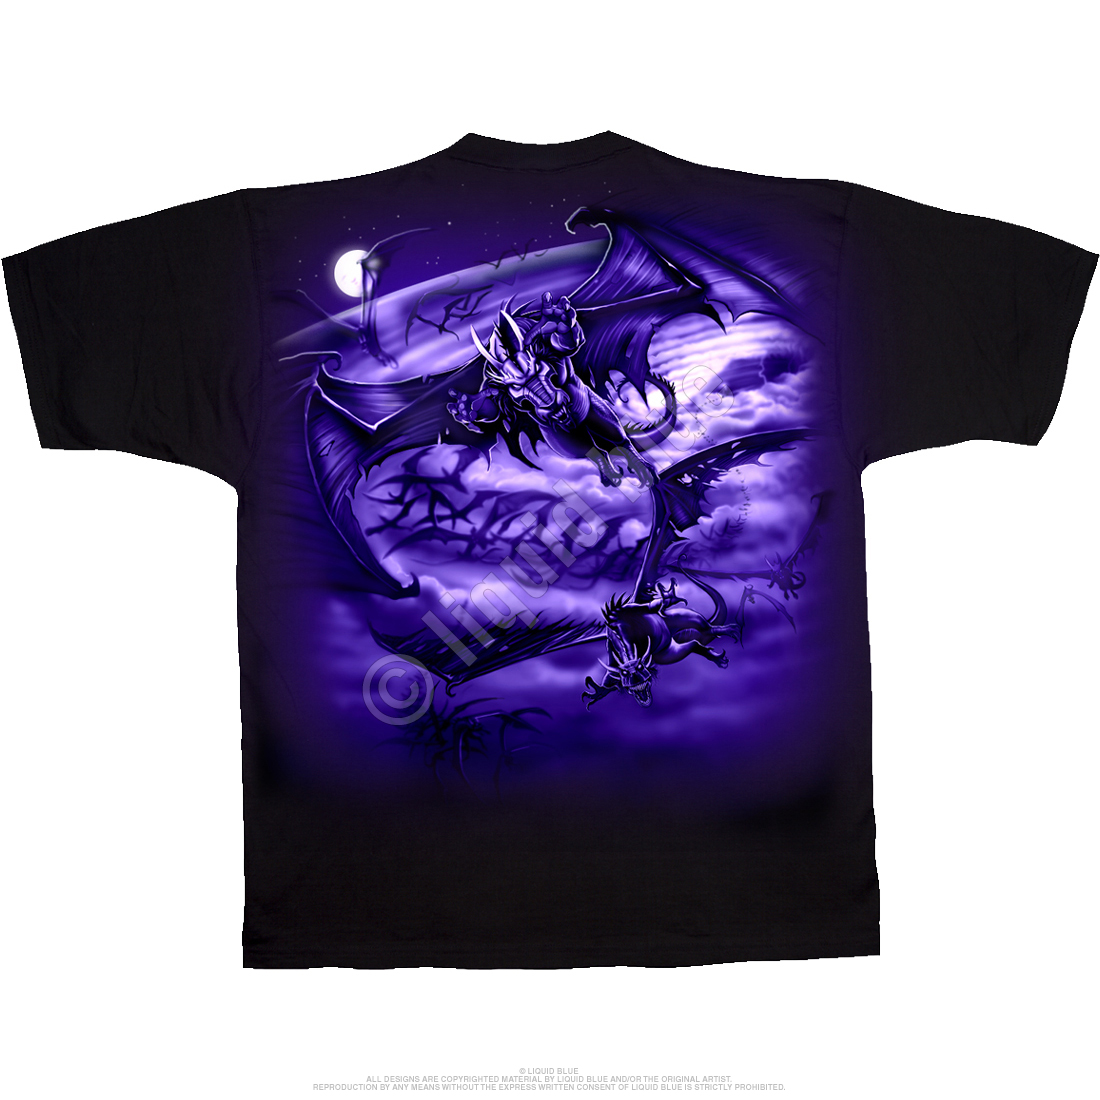 The Swarm Dark Fantasy T-shirt